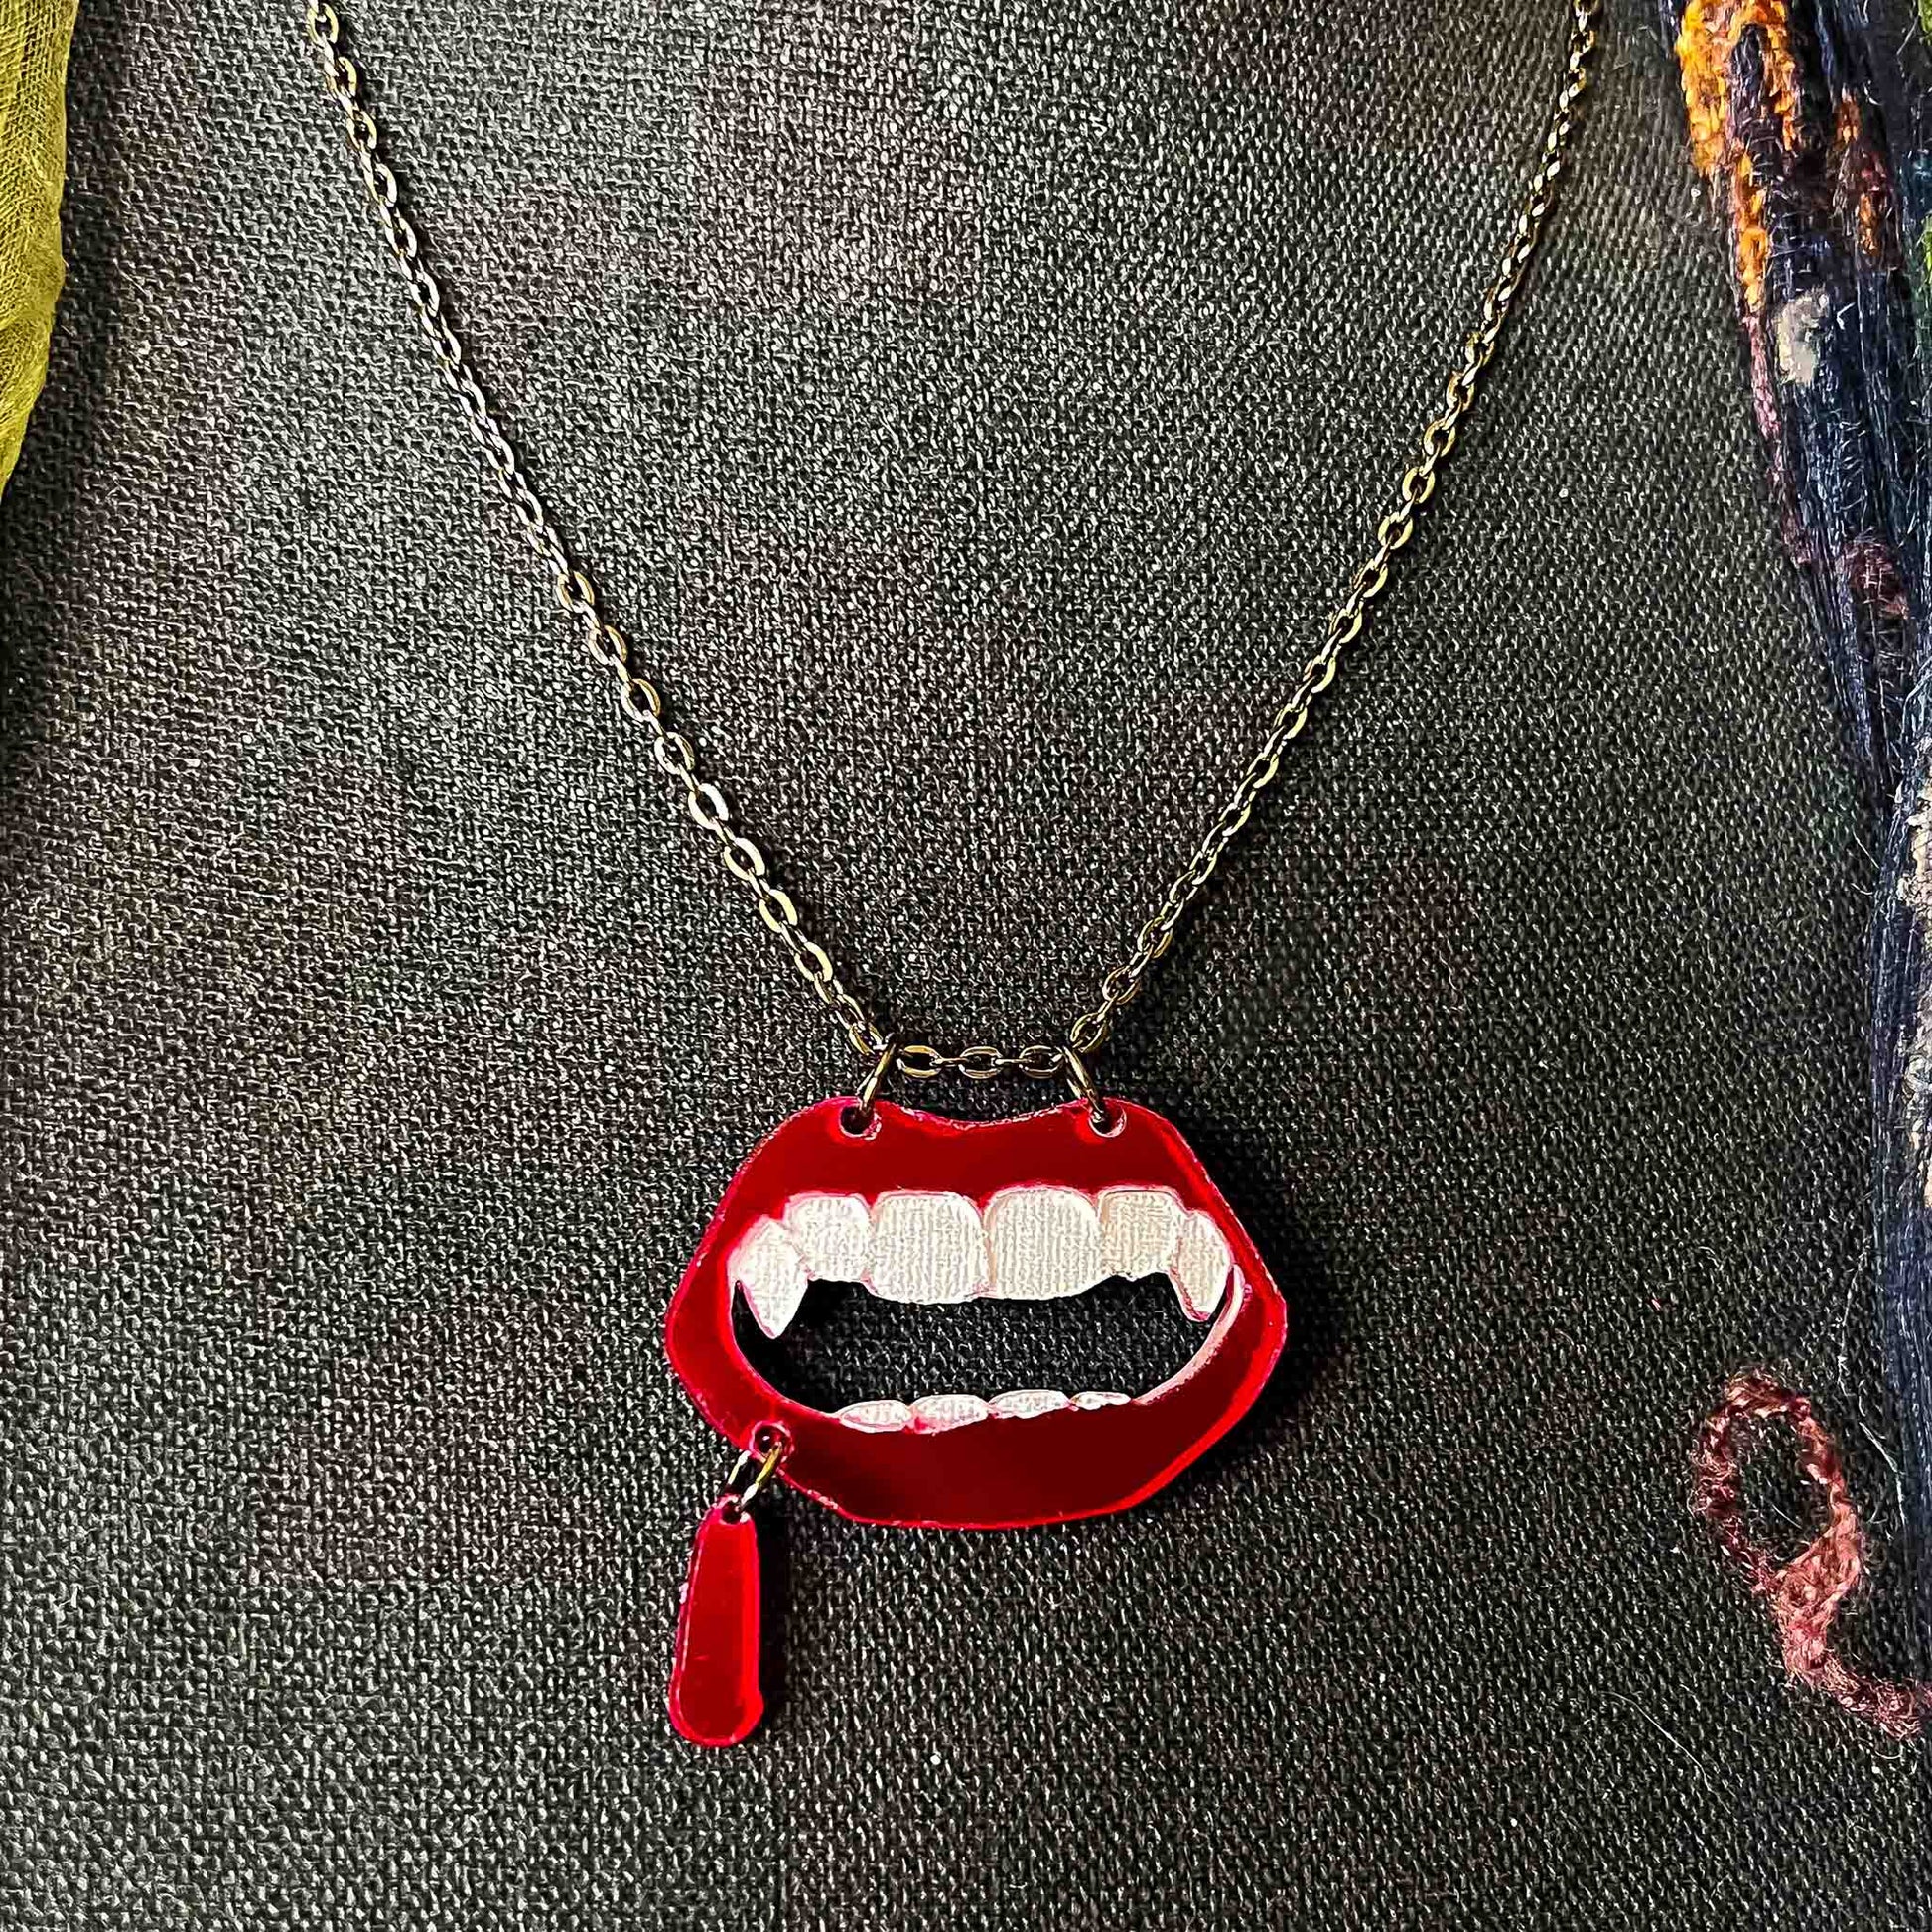 dripping vampire mouth necklace; Melasdesign Handmade; spooky; alternative; pendant; necklace; jewelry; shop small; gift idea